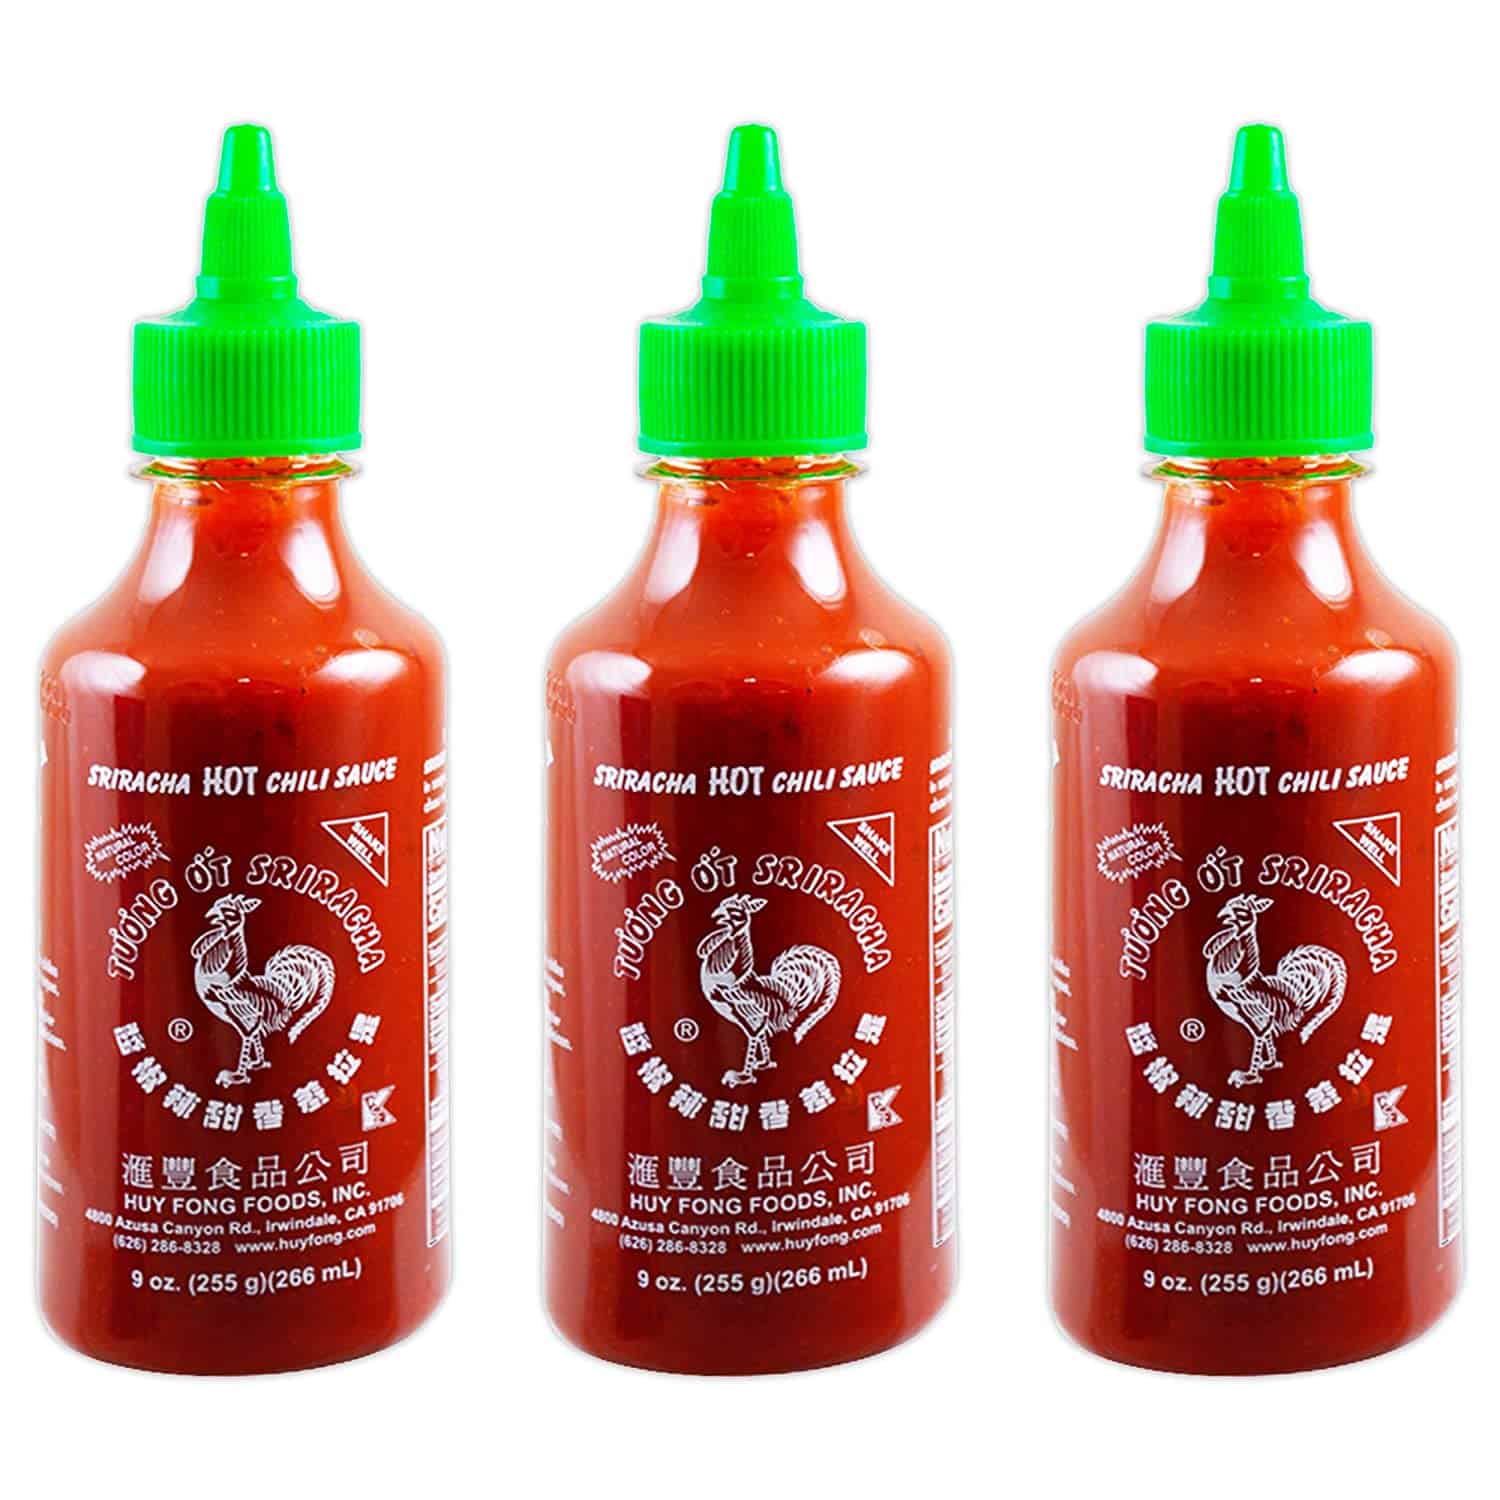 Does Sriracha Go Bad? How to Tell Daring Kitchen